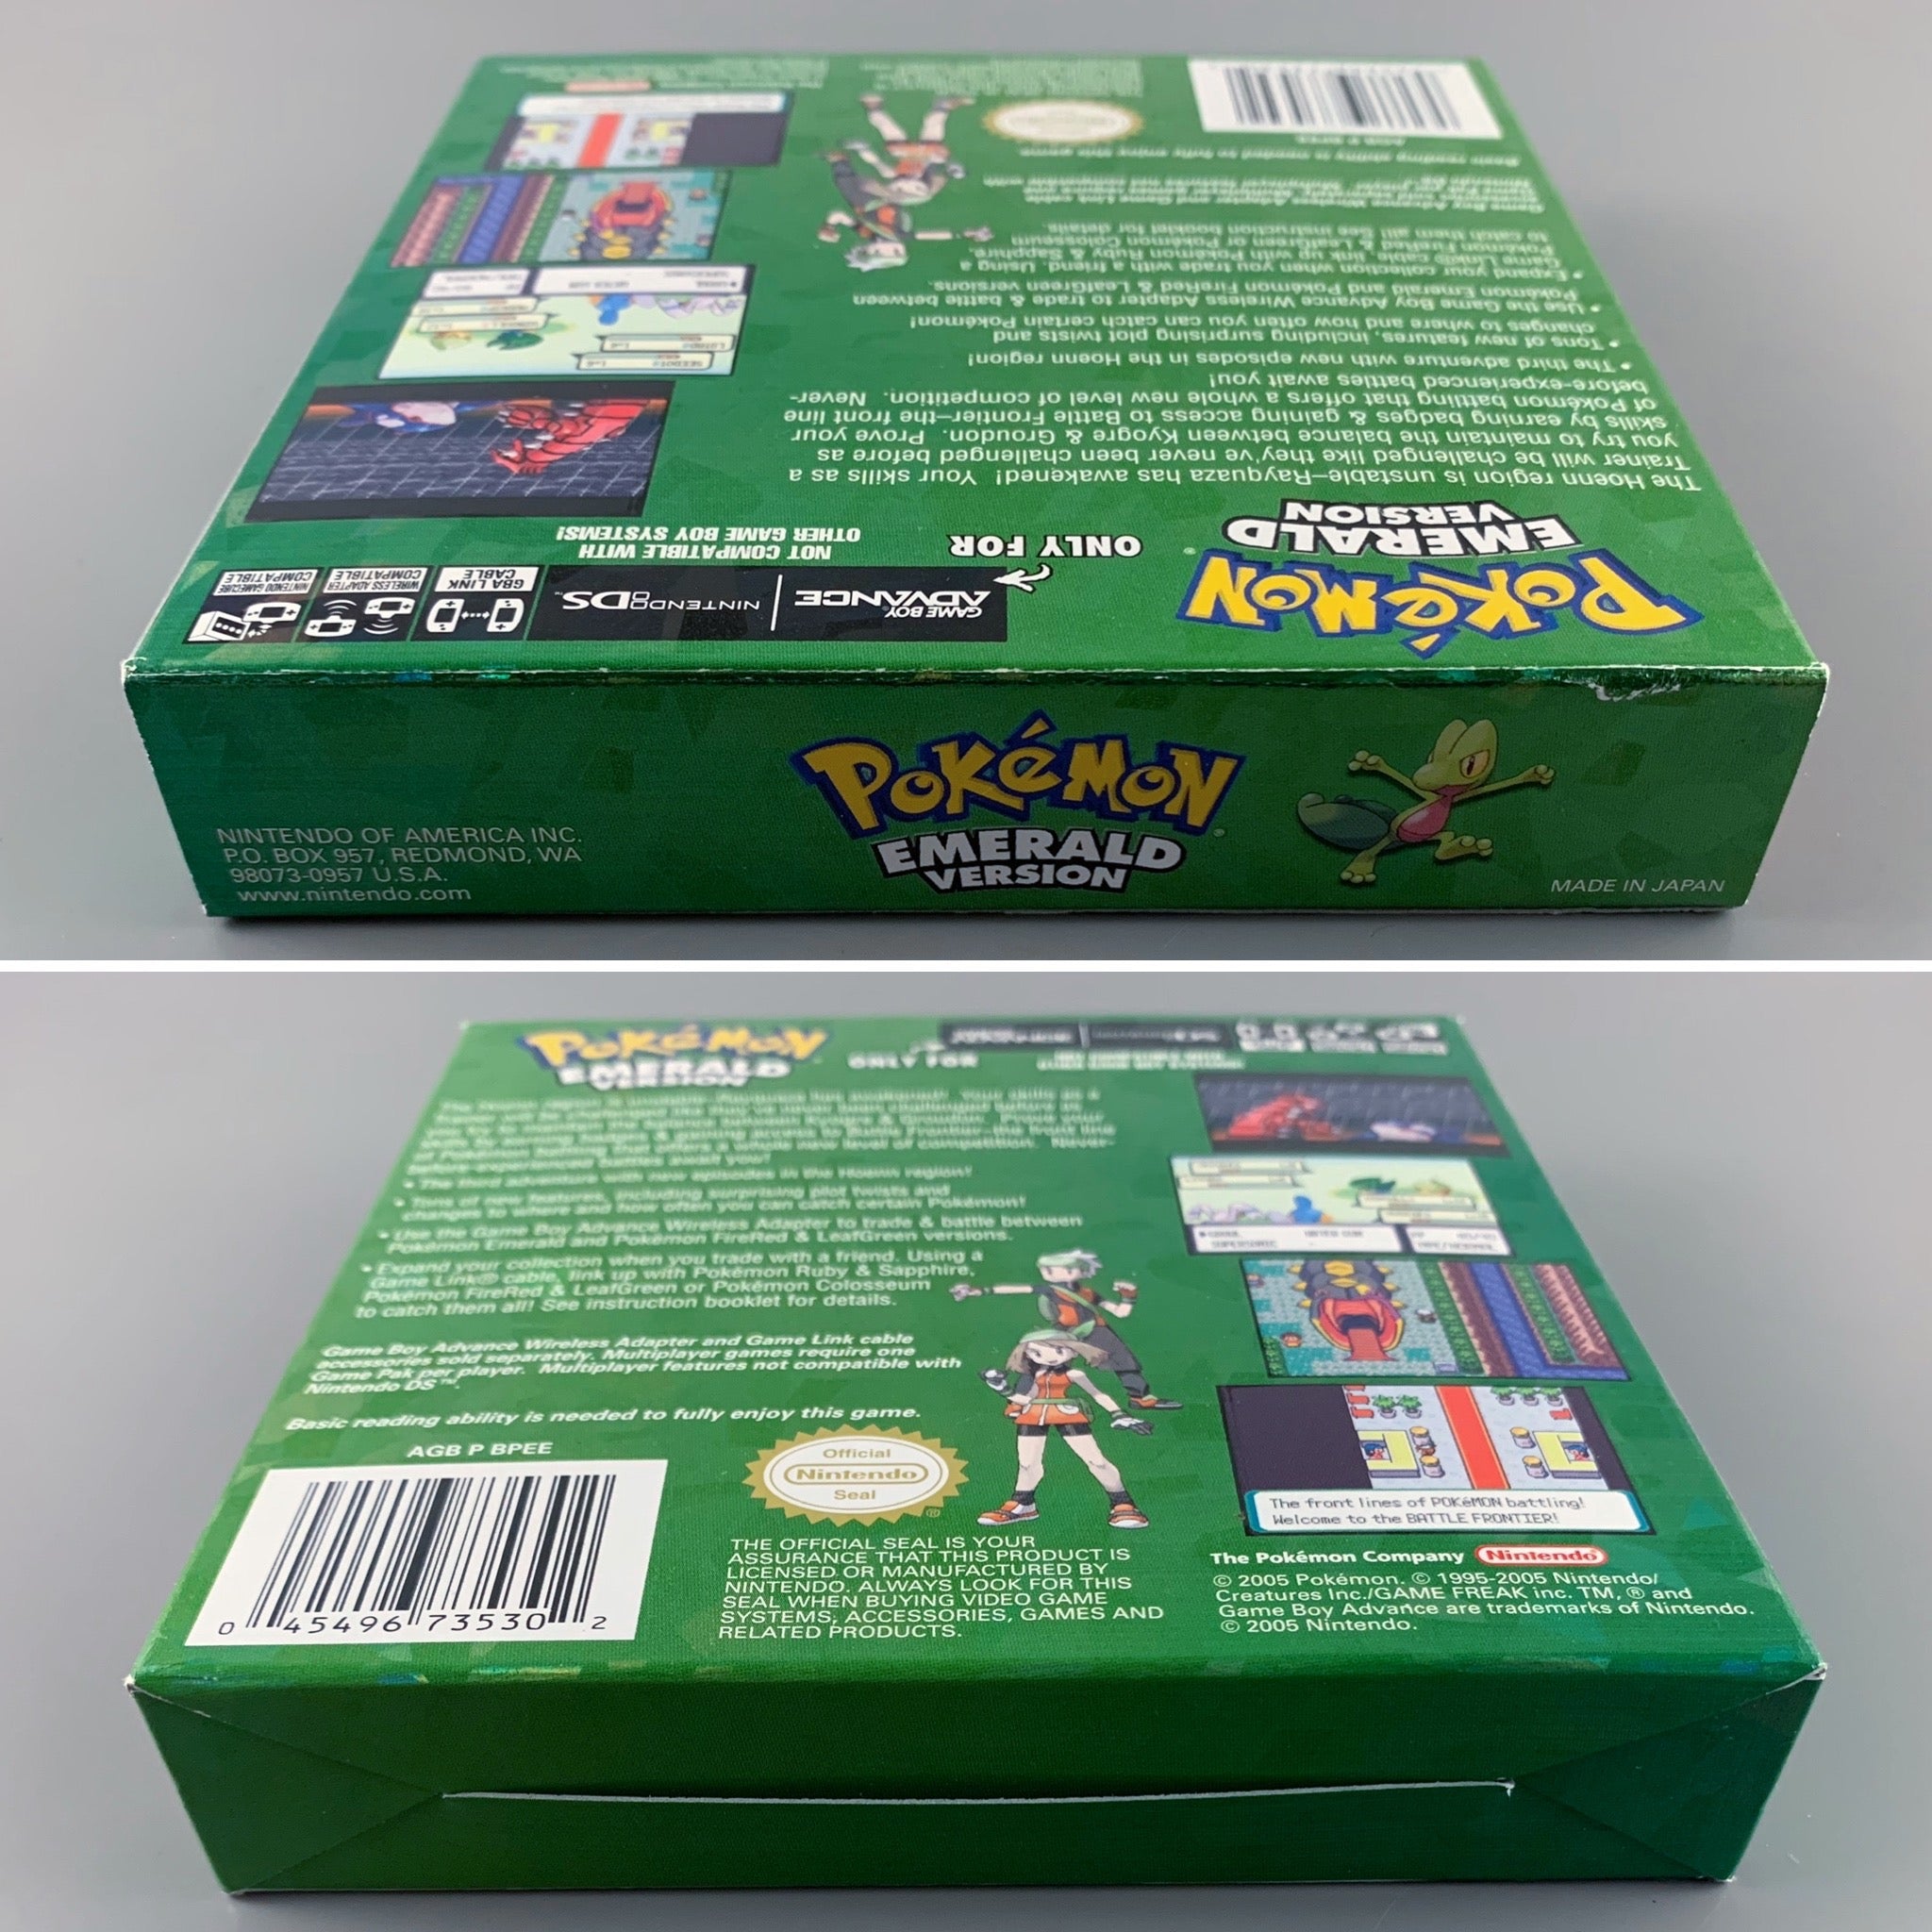 Pokémon Emerald Version Brand New Nintendo Gameboy Advance GBA